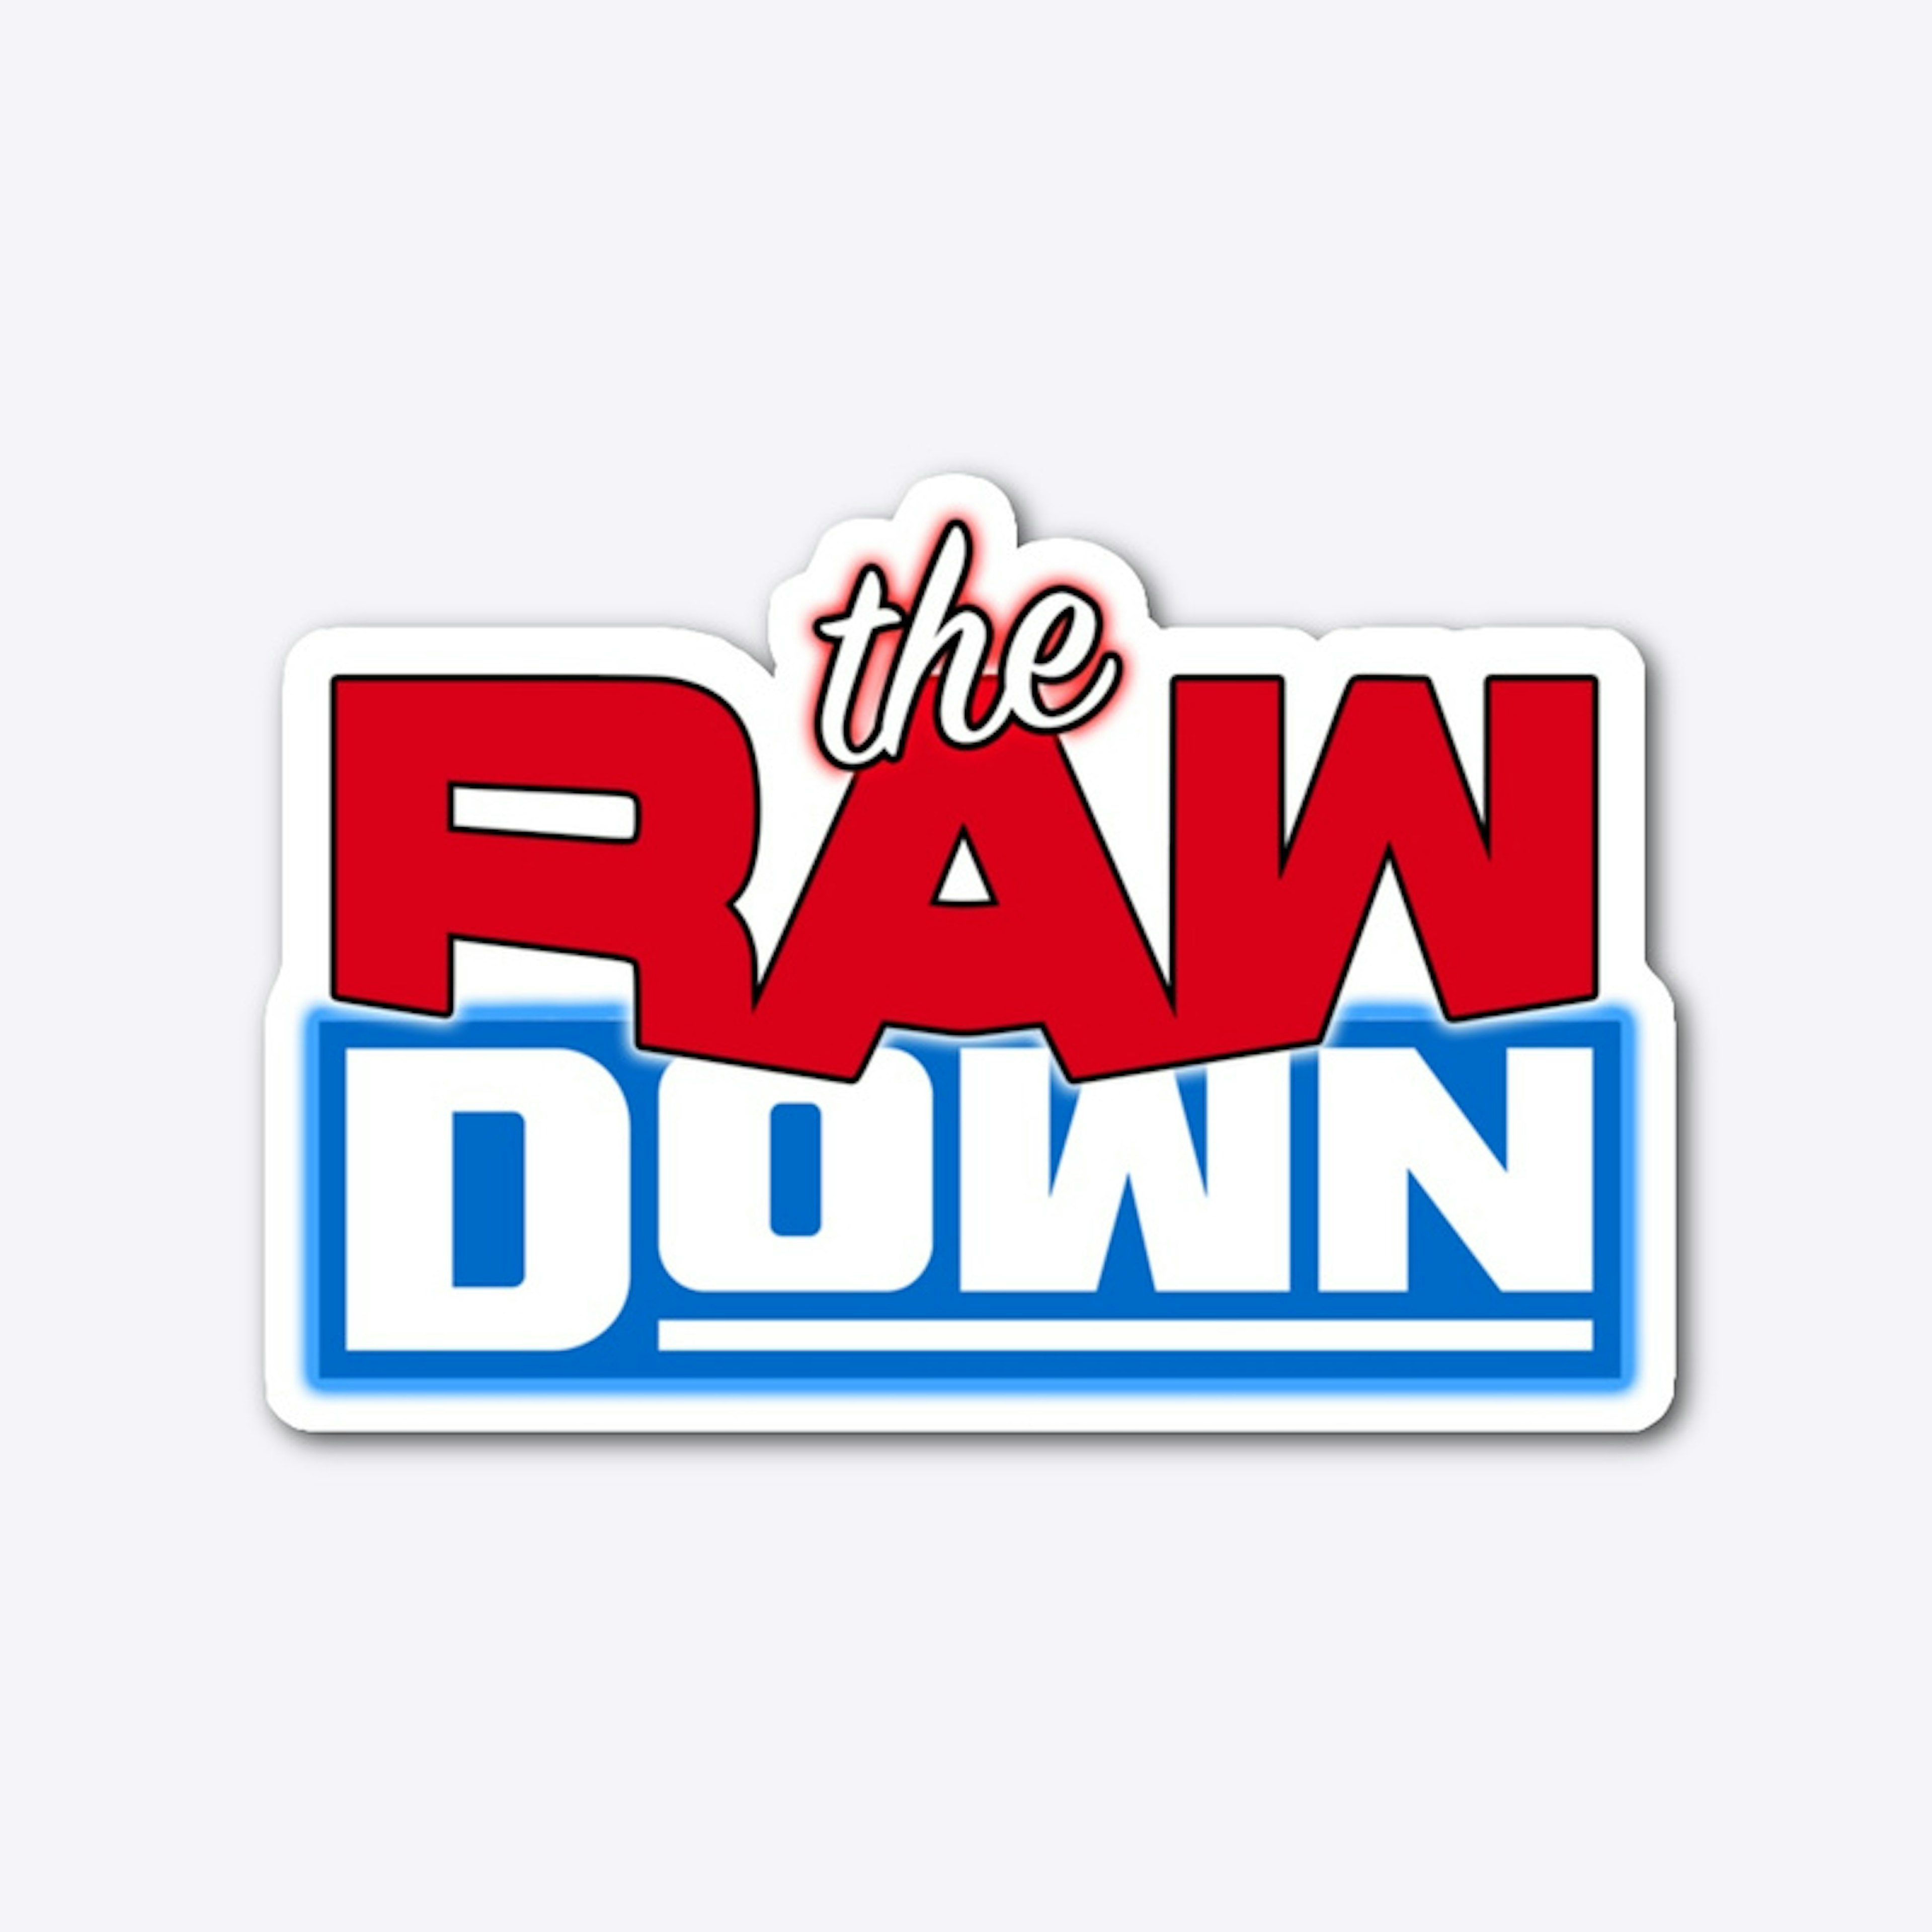 The RAWDOWN sticker